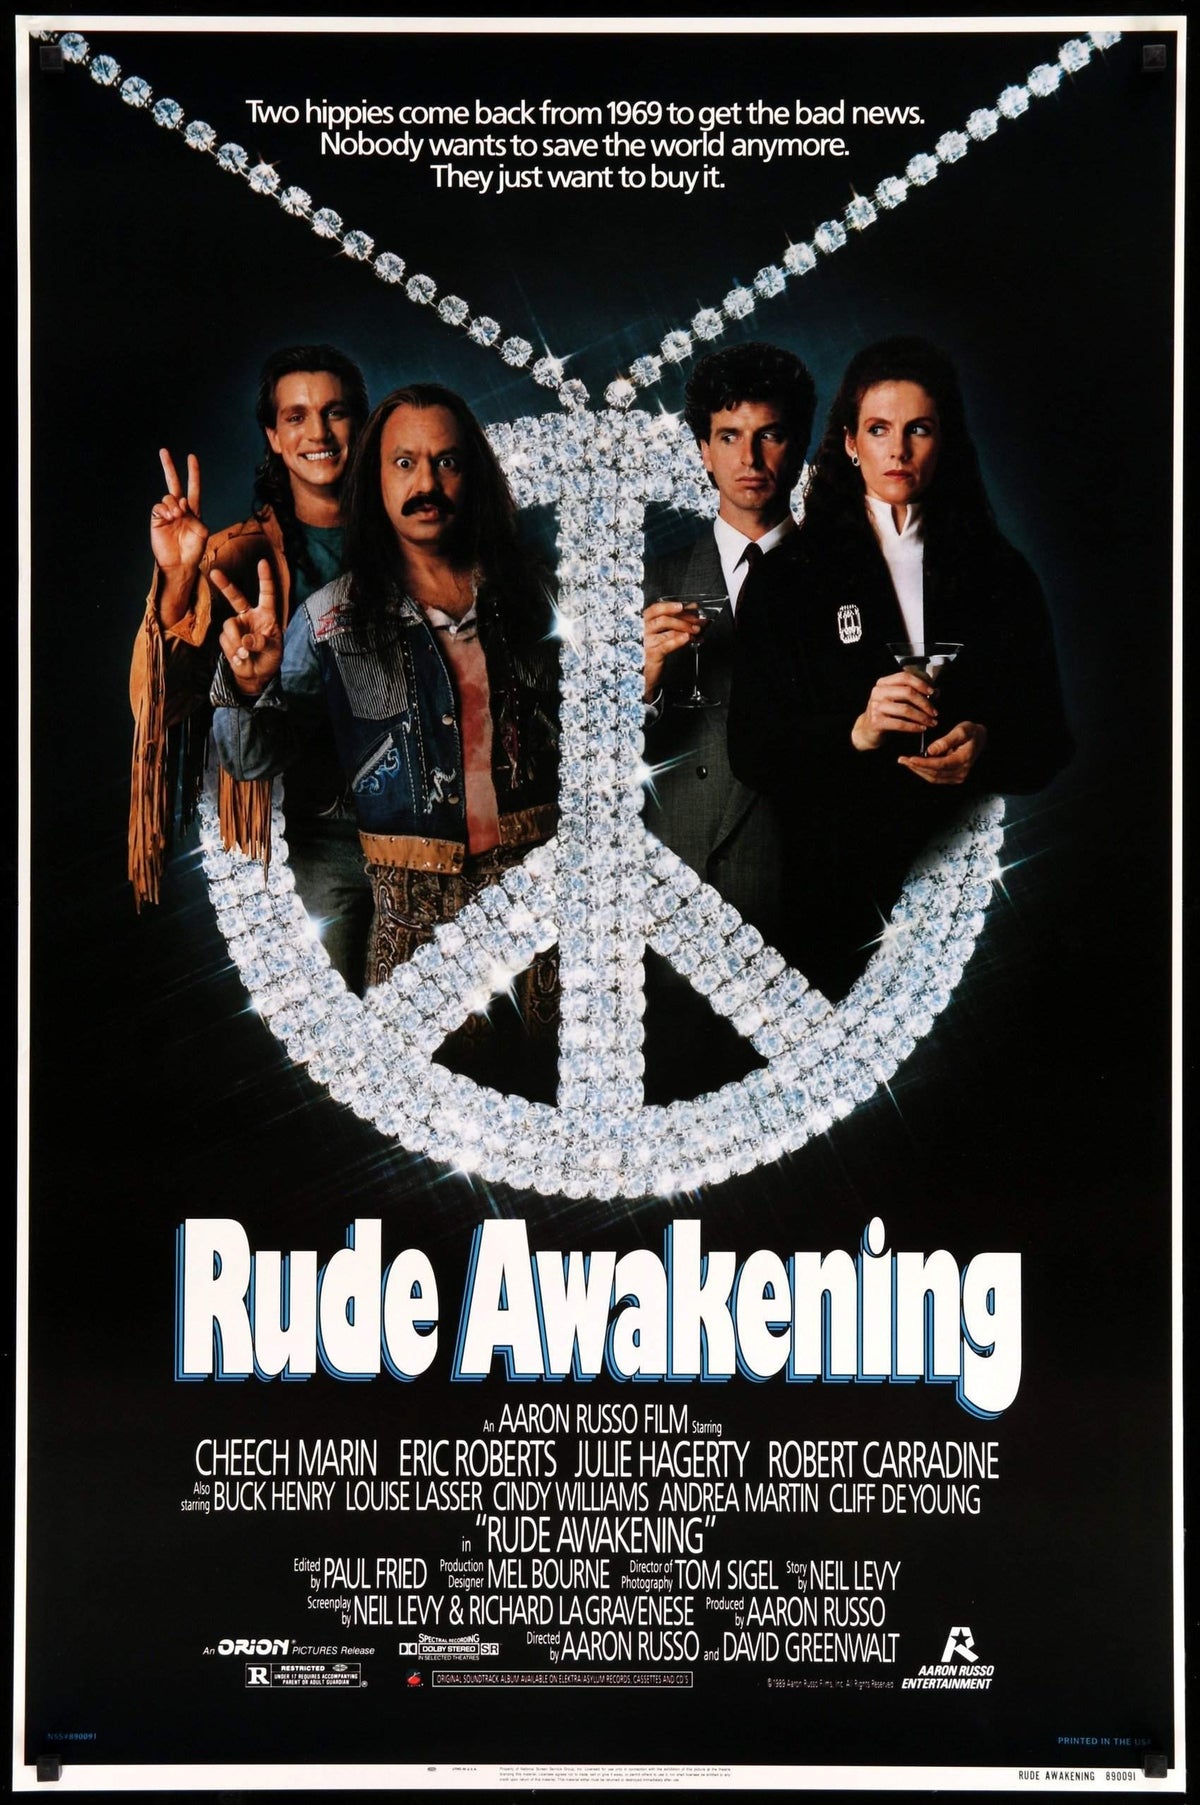 Rude Awakening (1989) original movie poster for sale at Original Film Art